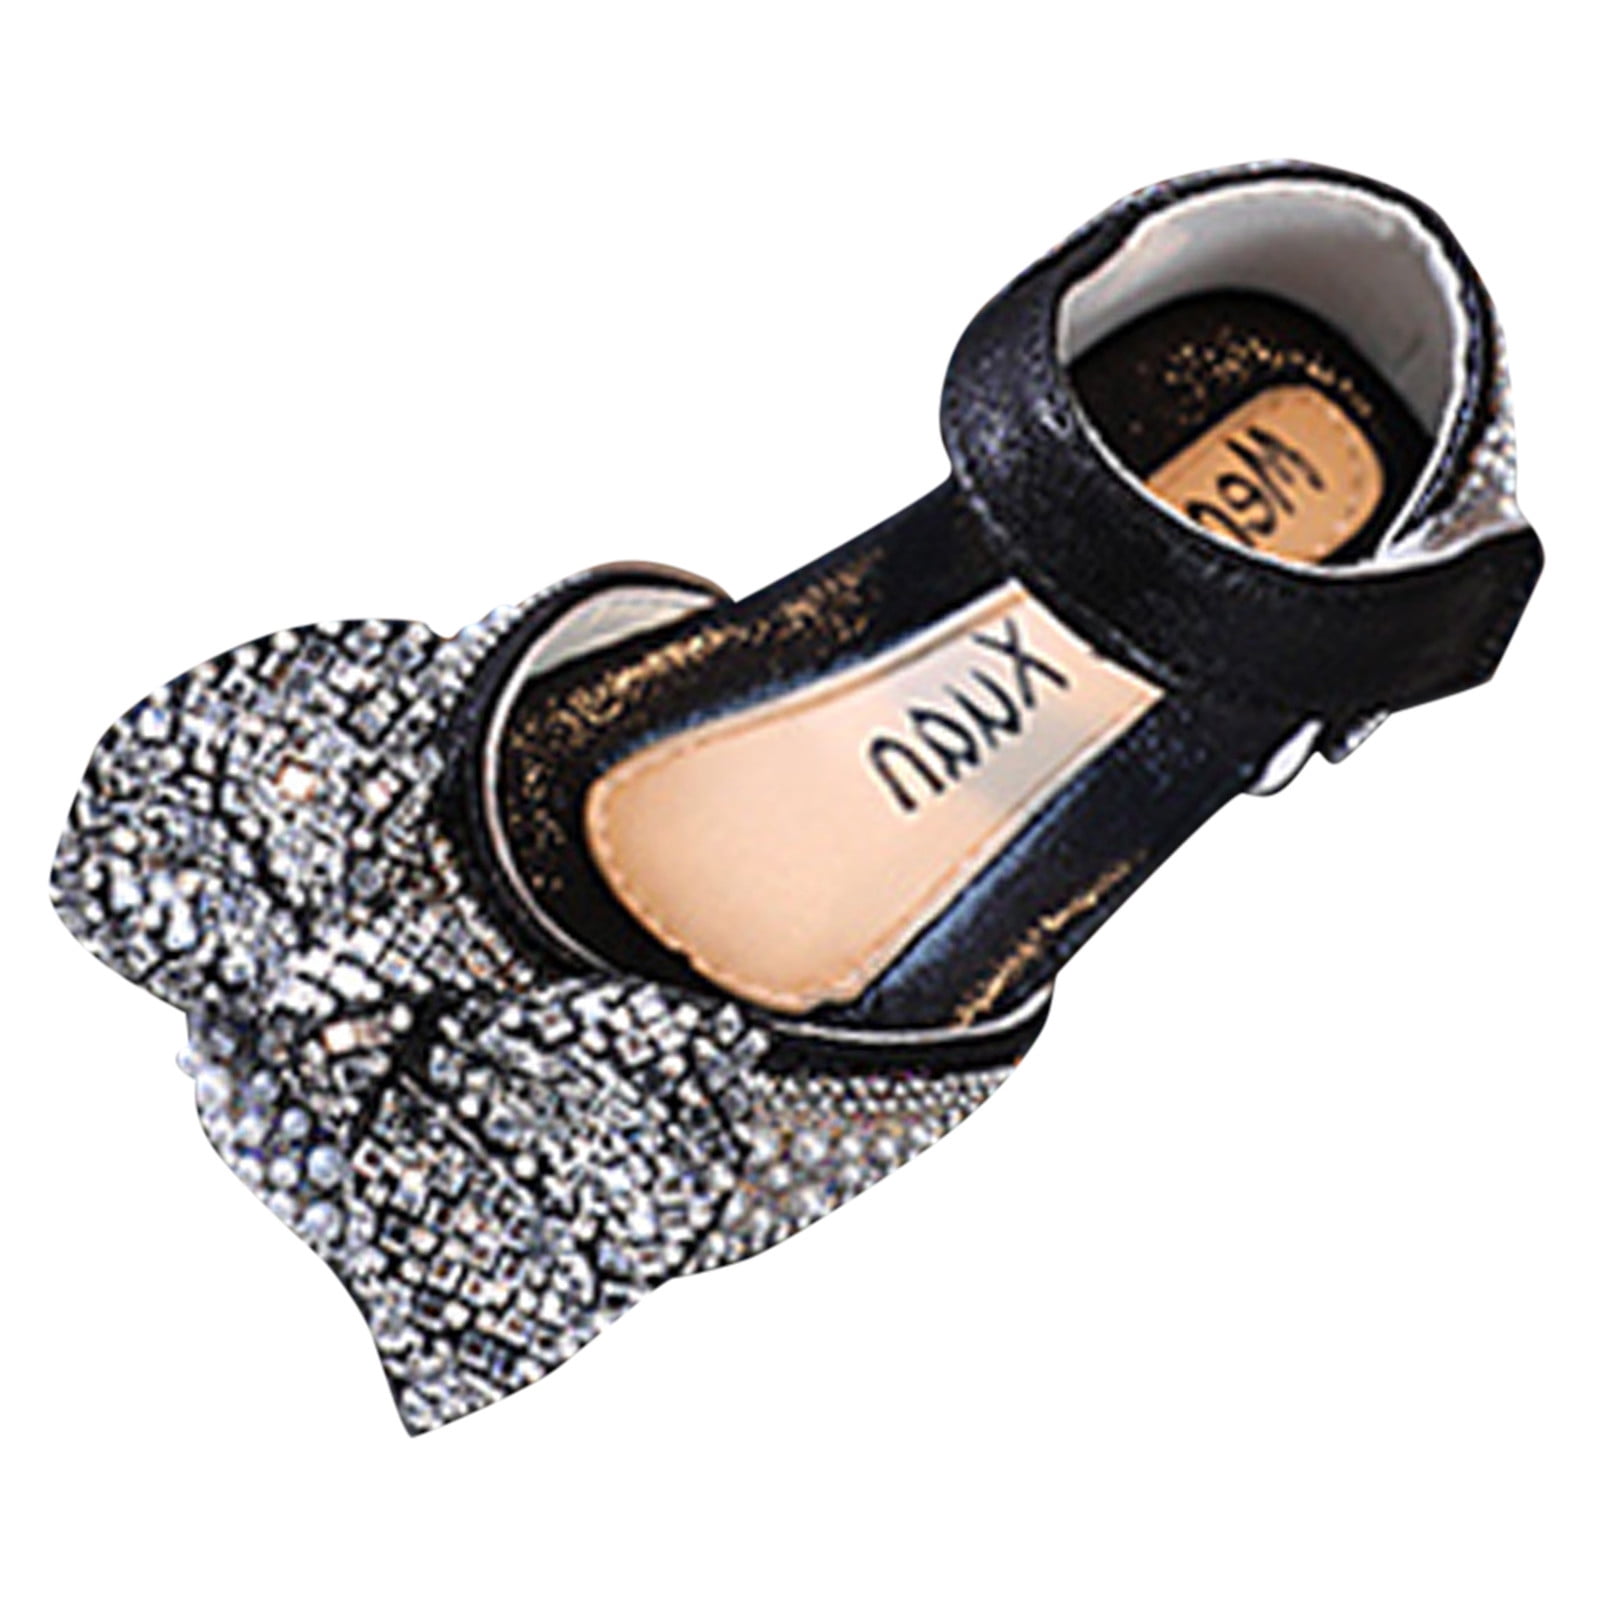 adviicd Toddler Girls Sandals Softe Beach Summer Shoes Mary Jane Dress ...